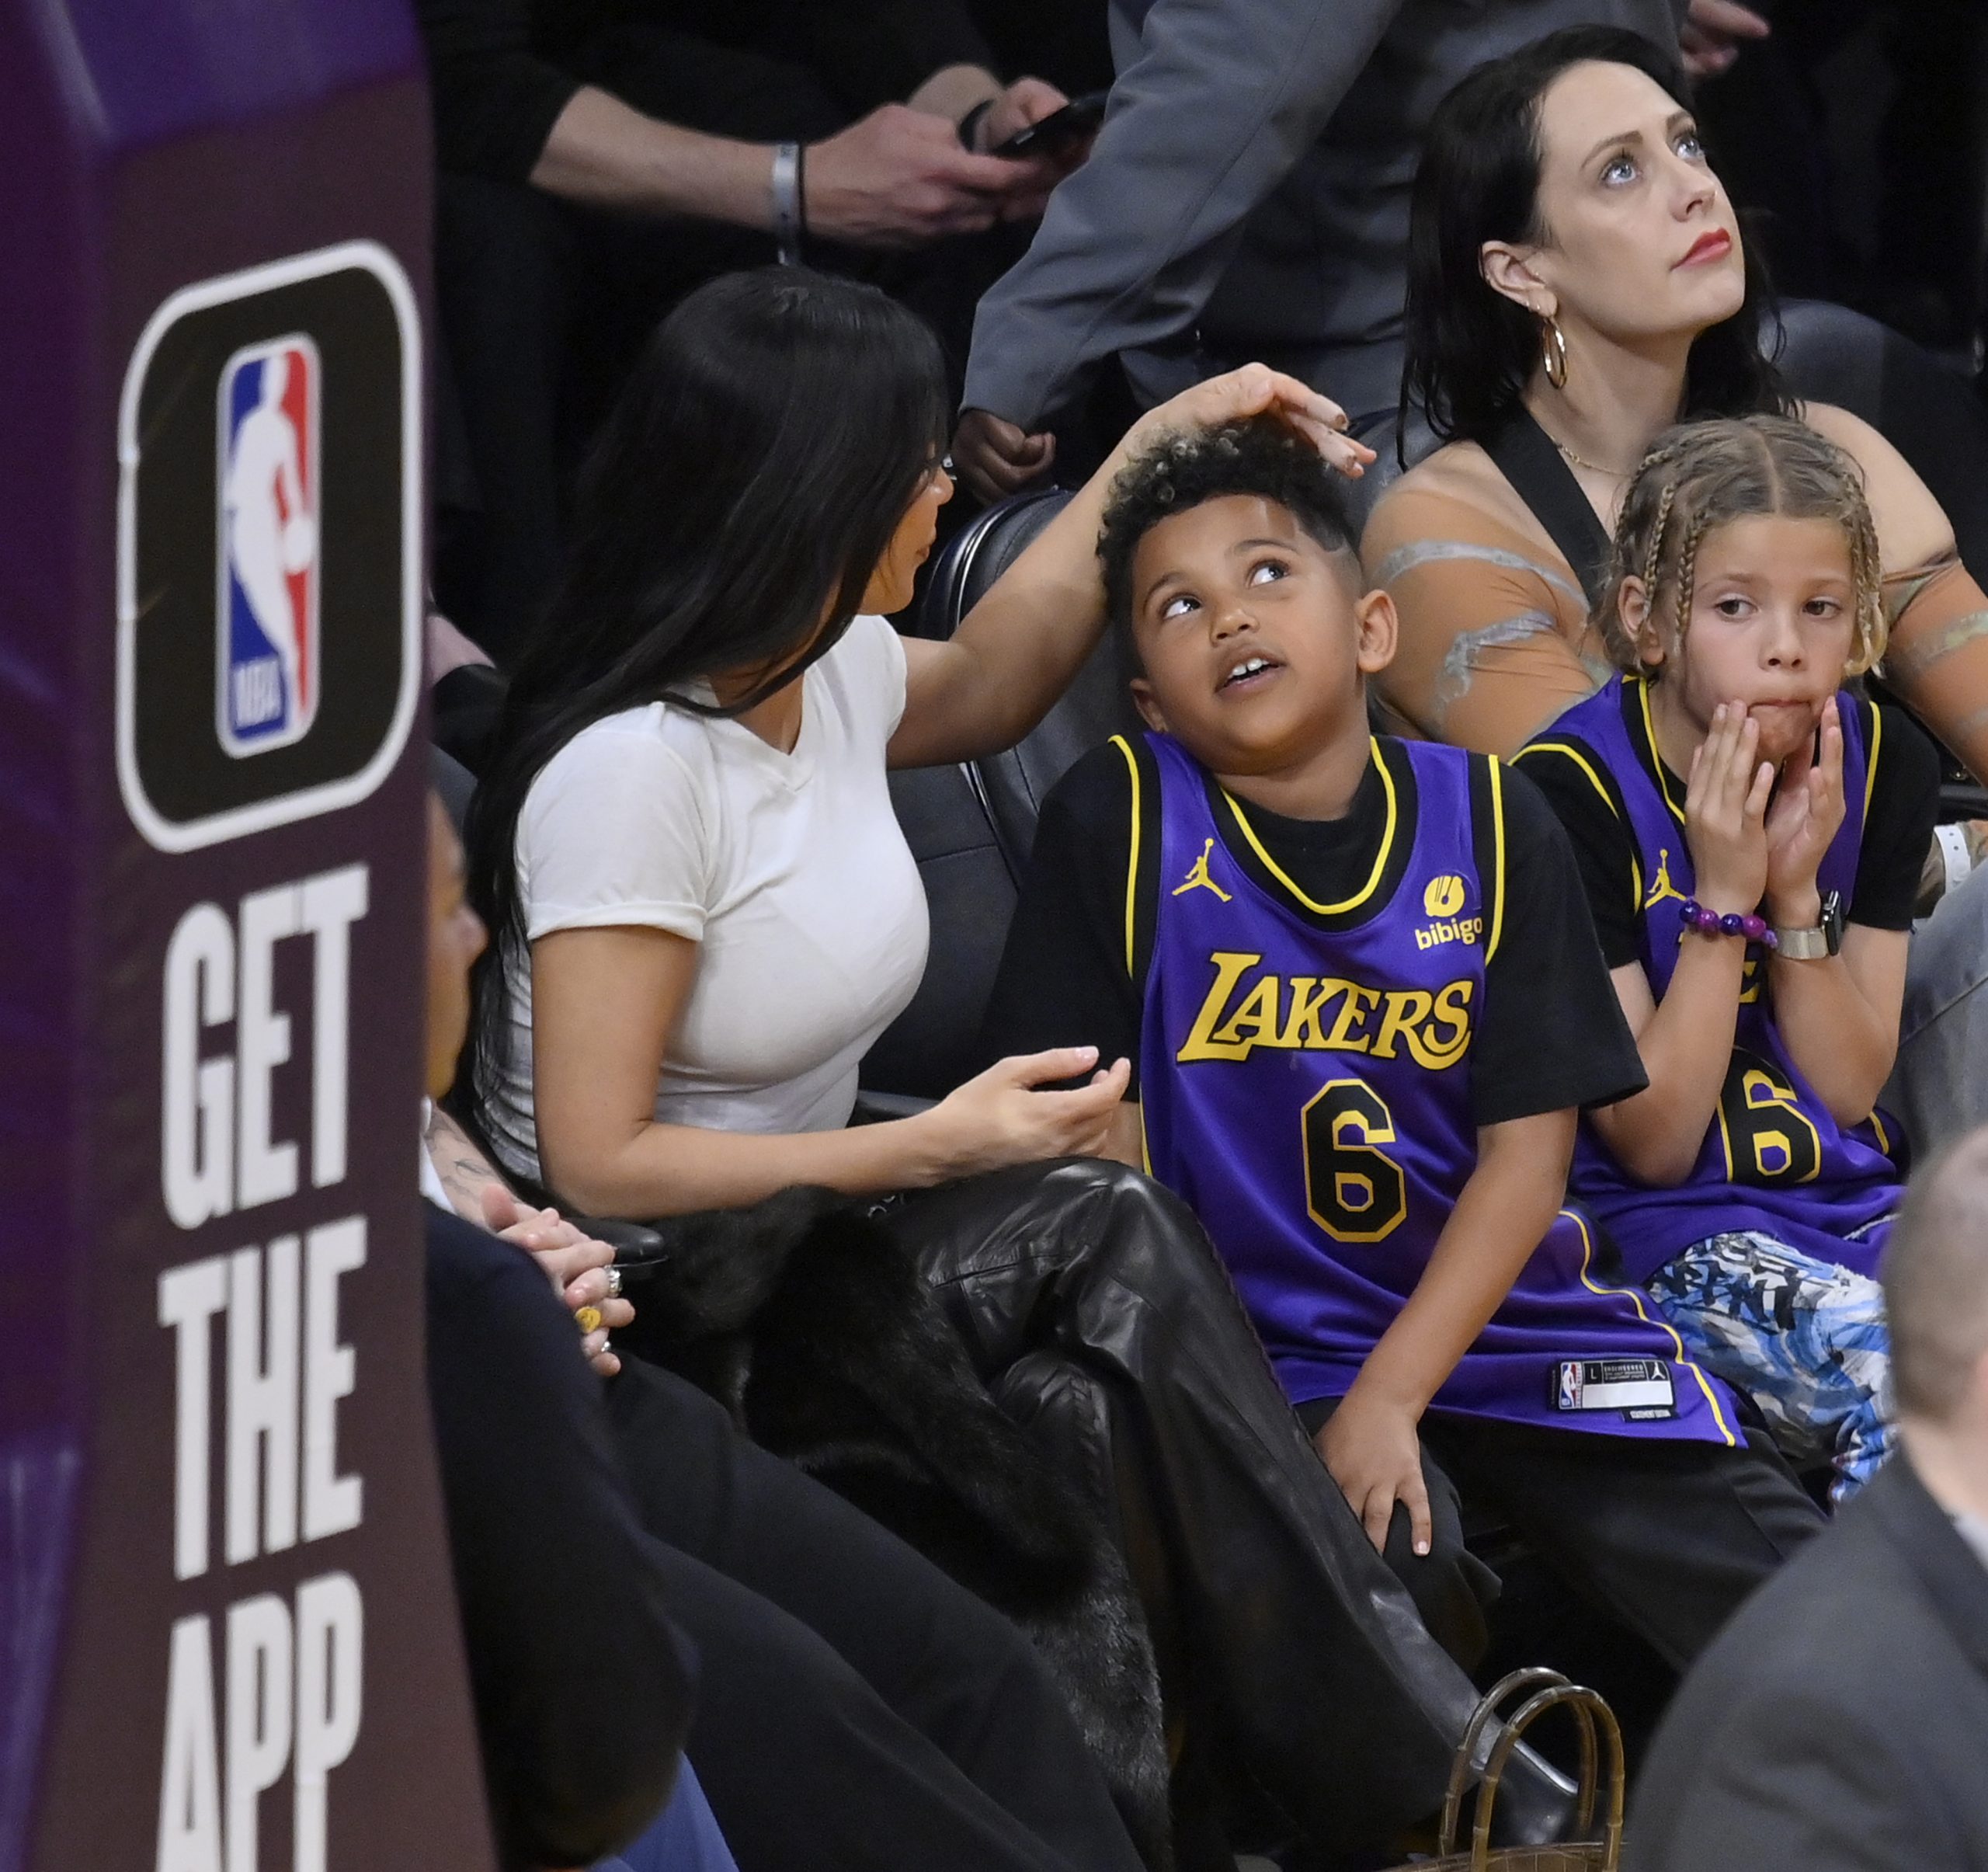 Jennifer Lopez, Ben Affleck attend Lakers game alongside Kim Kardashian,  Bad Bunny and more celebs